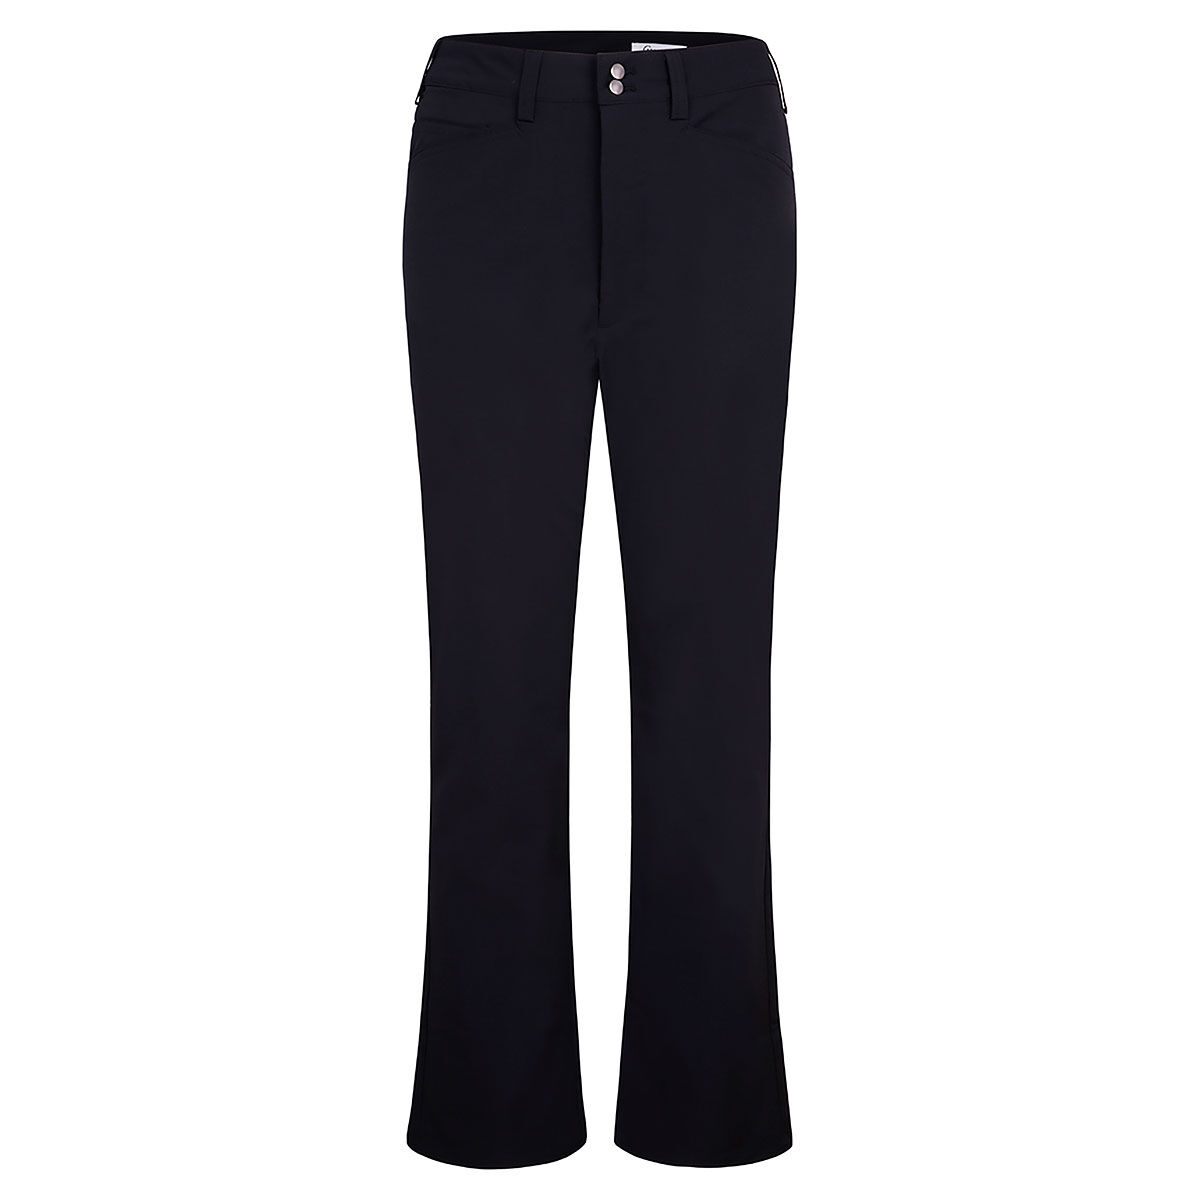 Pantalon Greg Norman pour femmes, femme, Short, Black, Xtra small | Online Golf